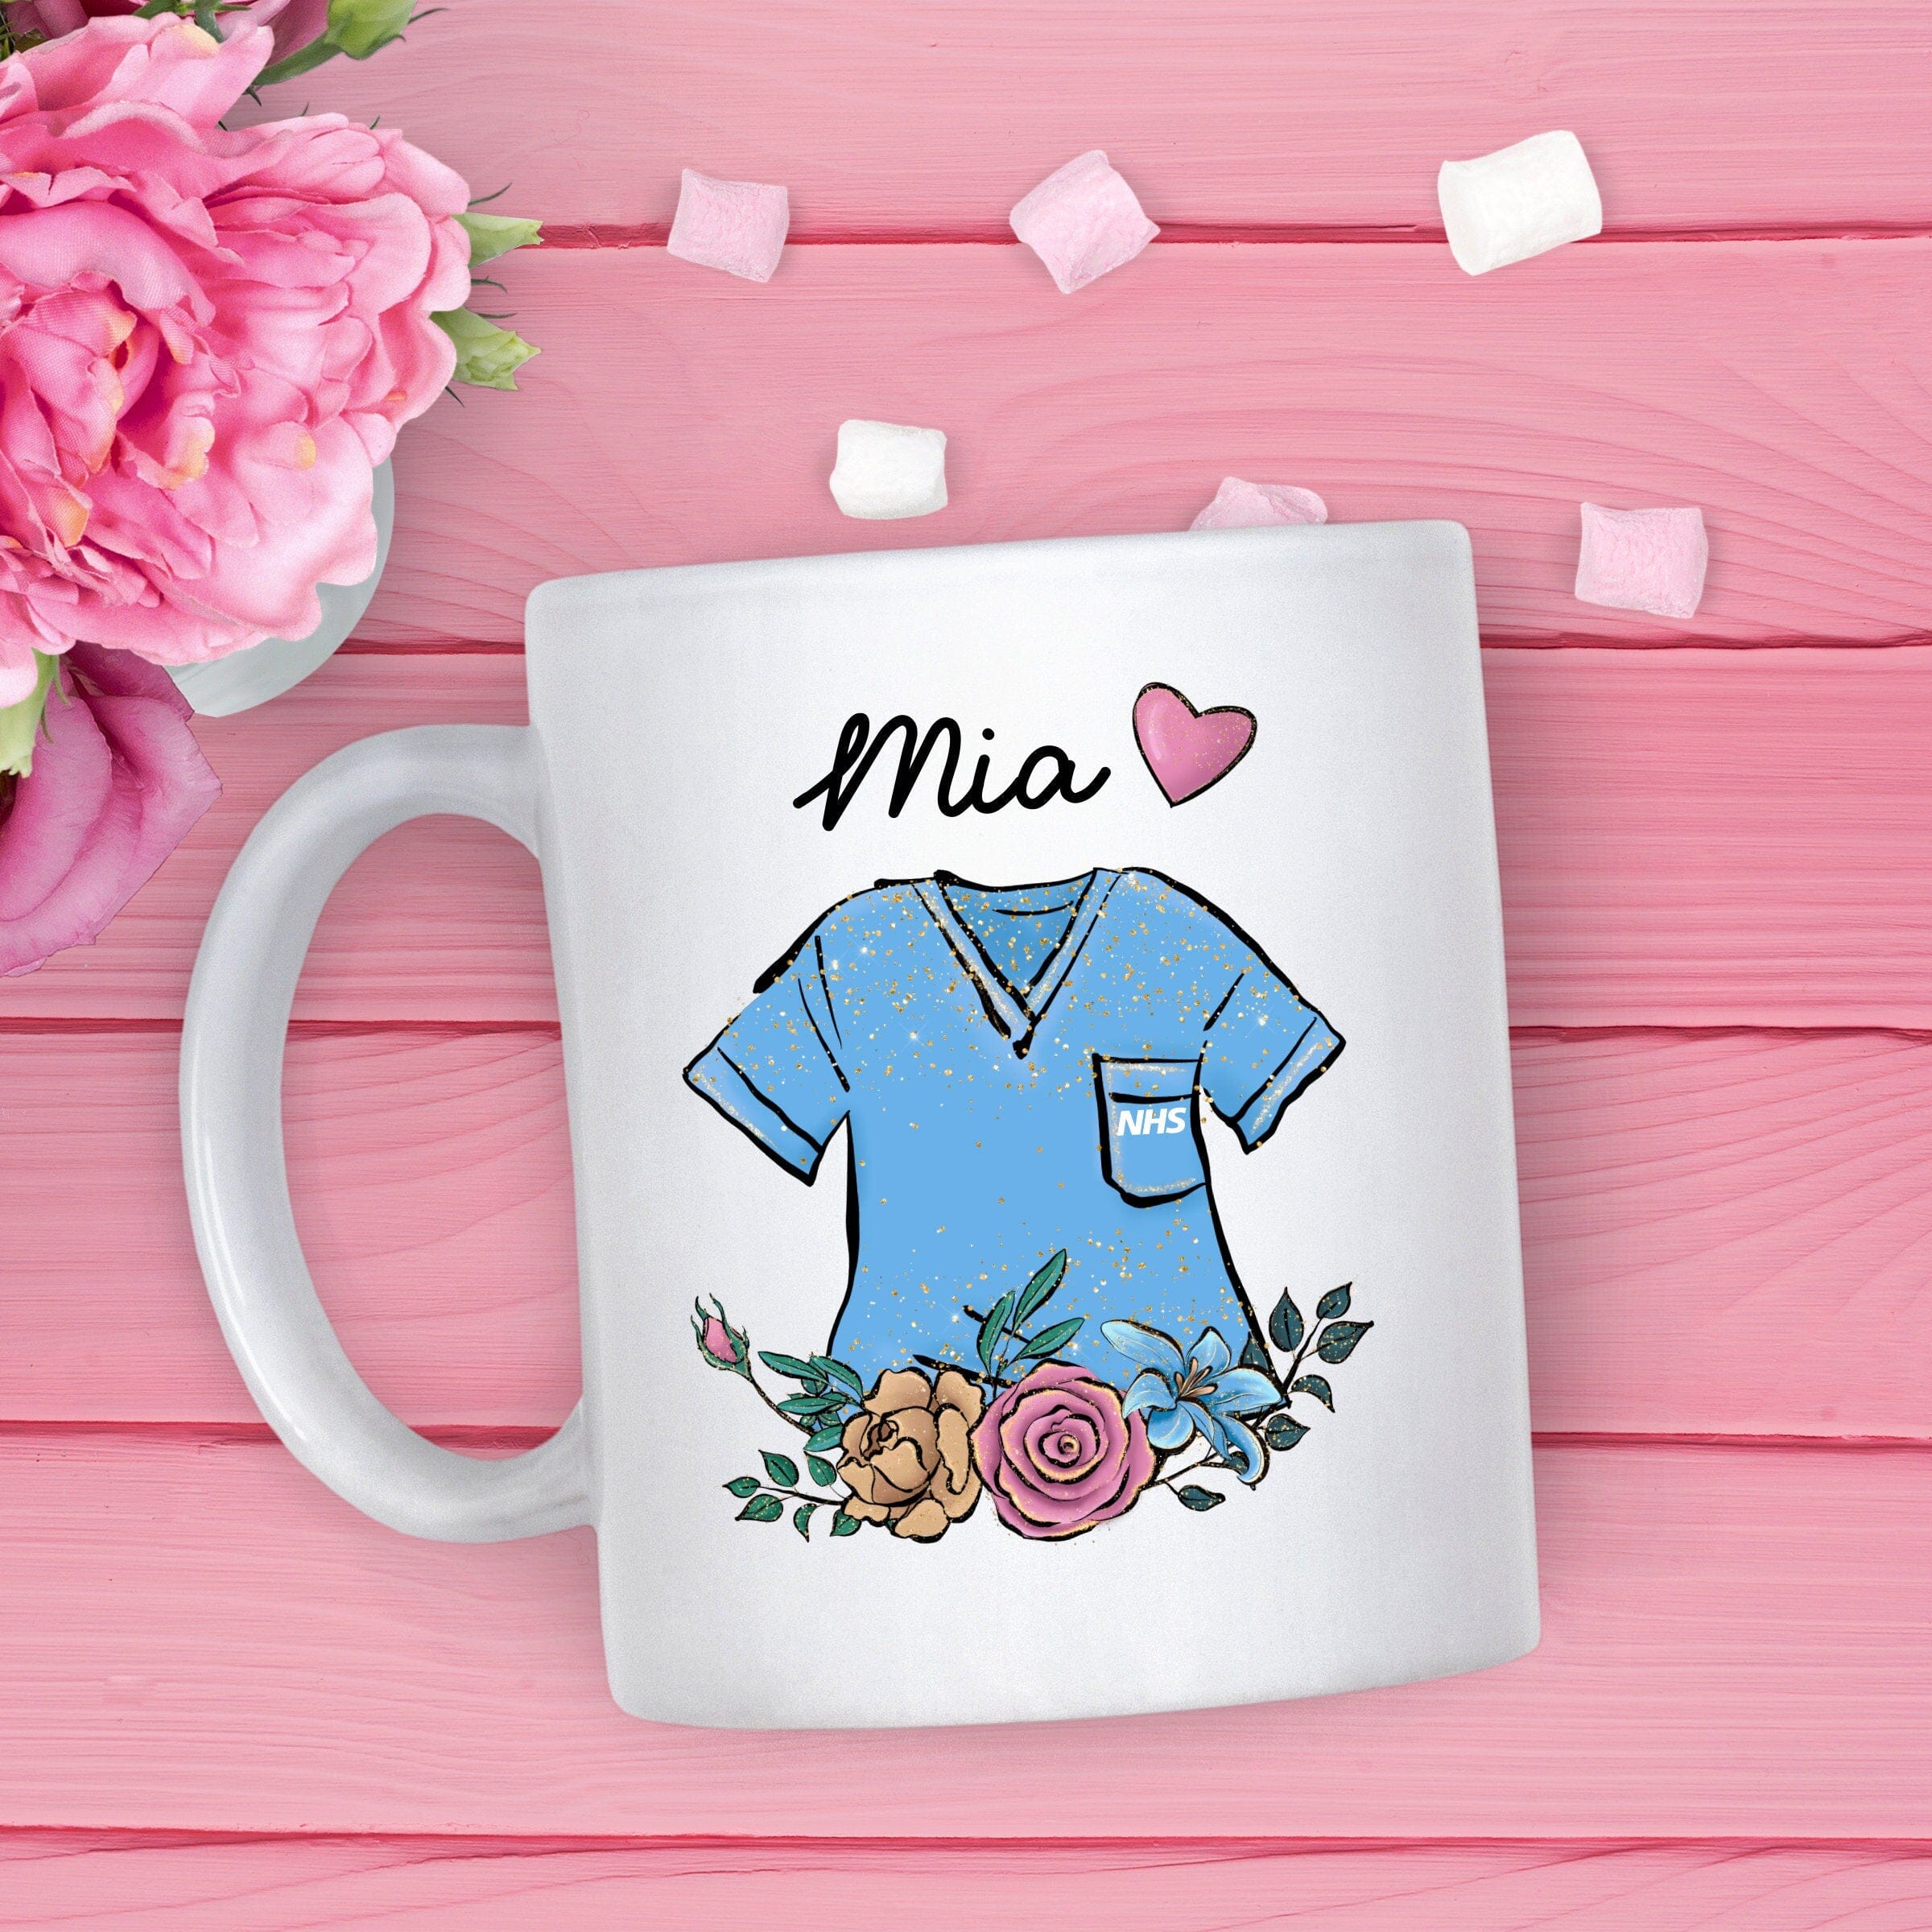 Personalised nurse mug with name, NHS nurse Thank you gift, New nurse present, Christmas Birthday gift